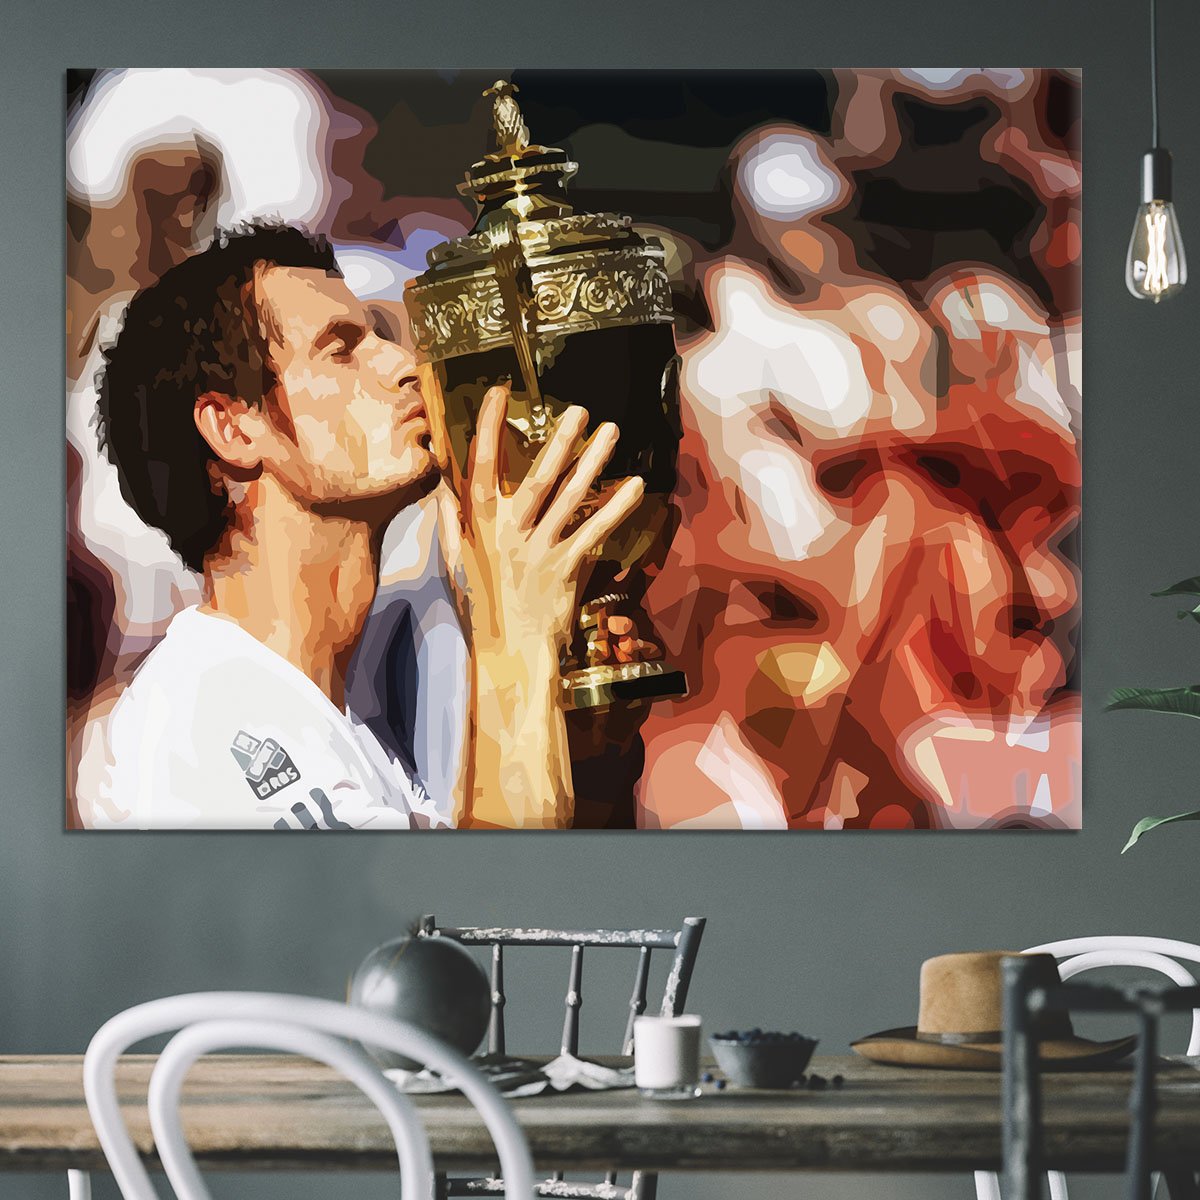 Andy Murray Wimbledon Winner Canvas Print or Poster